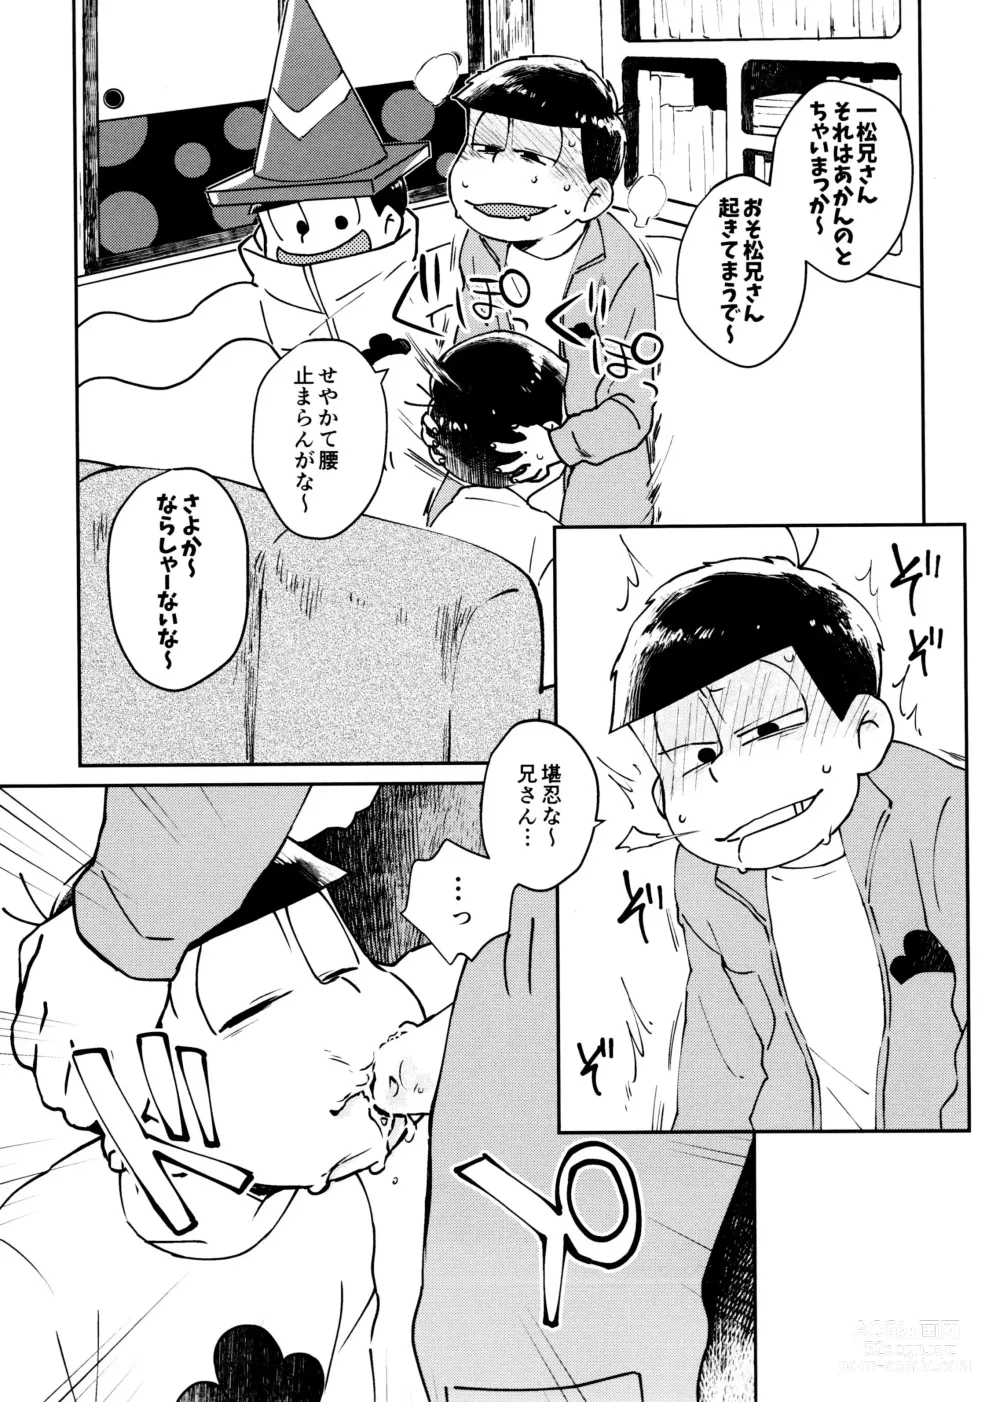 Page 9 of doujinshi Wild Coup dEtat